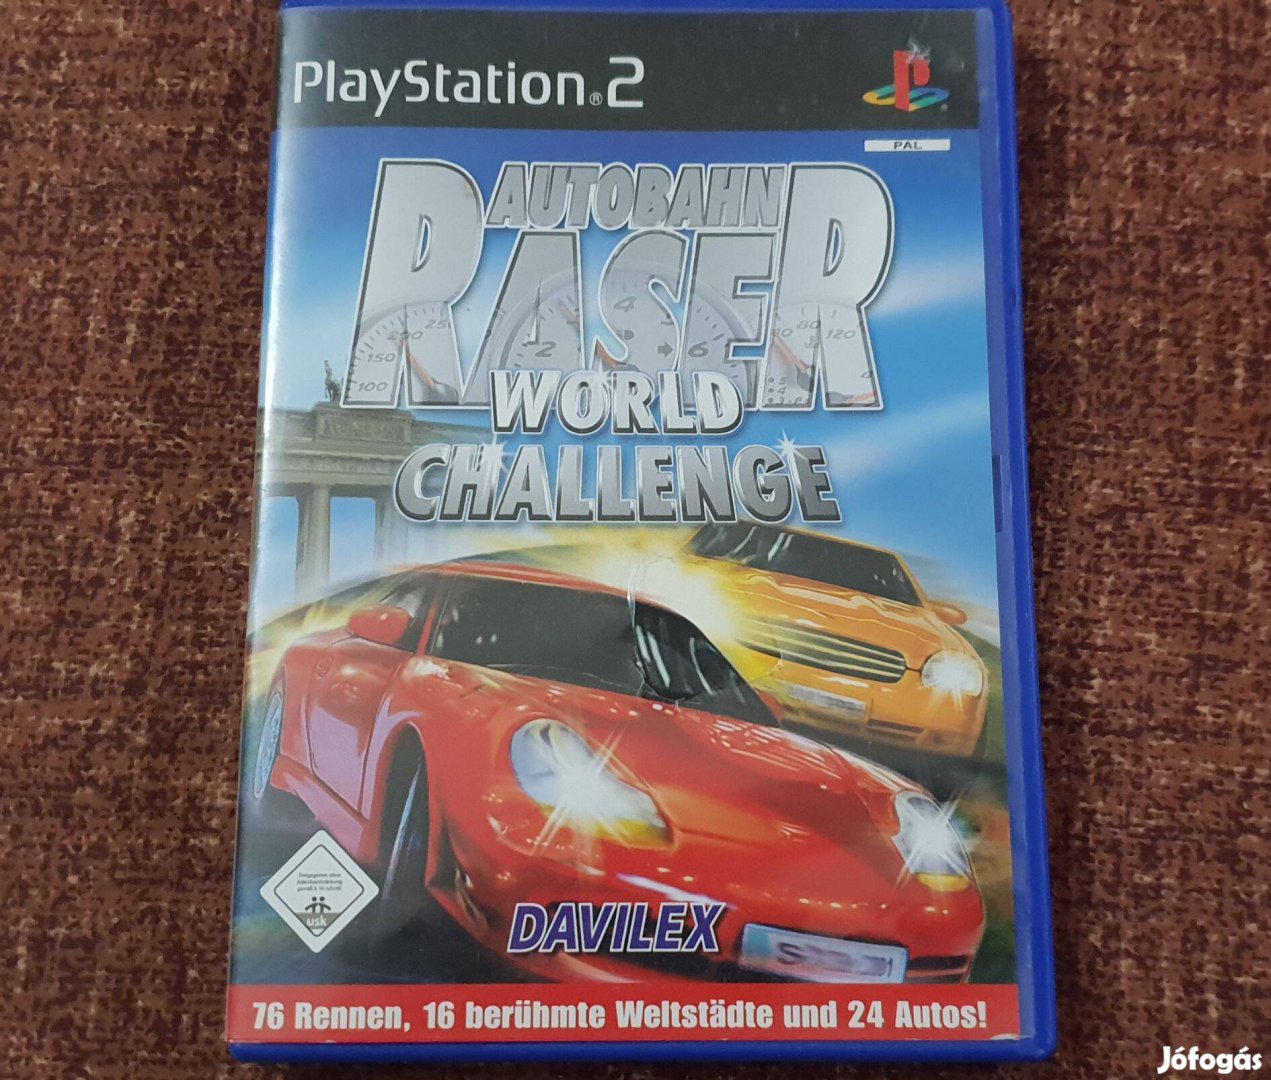 Autobahn Racer World Challange Playstation 2 eredeti lemez ( 2500 Ft )